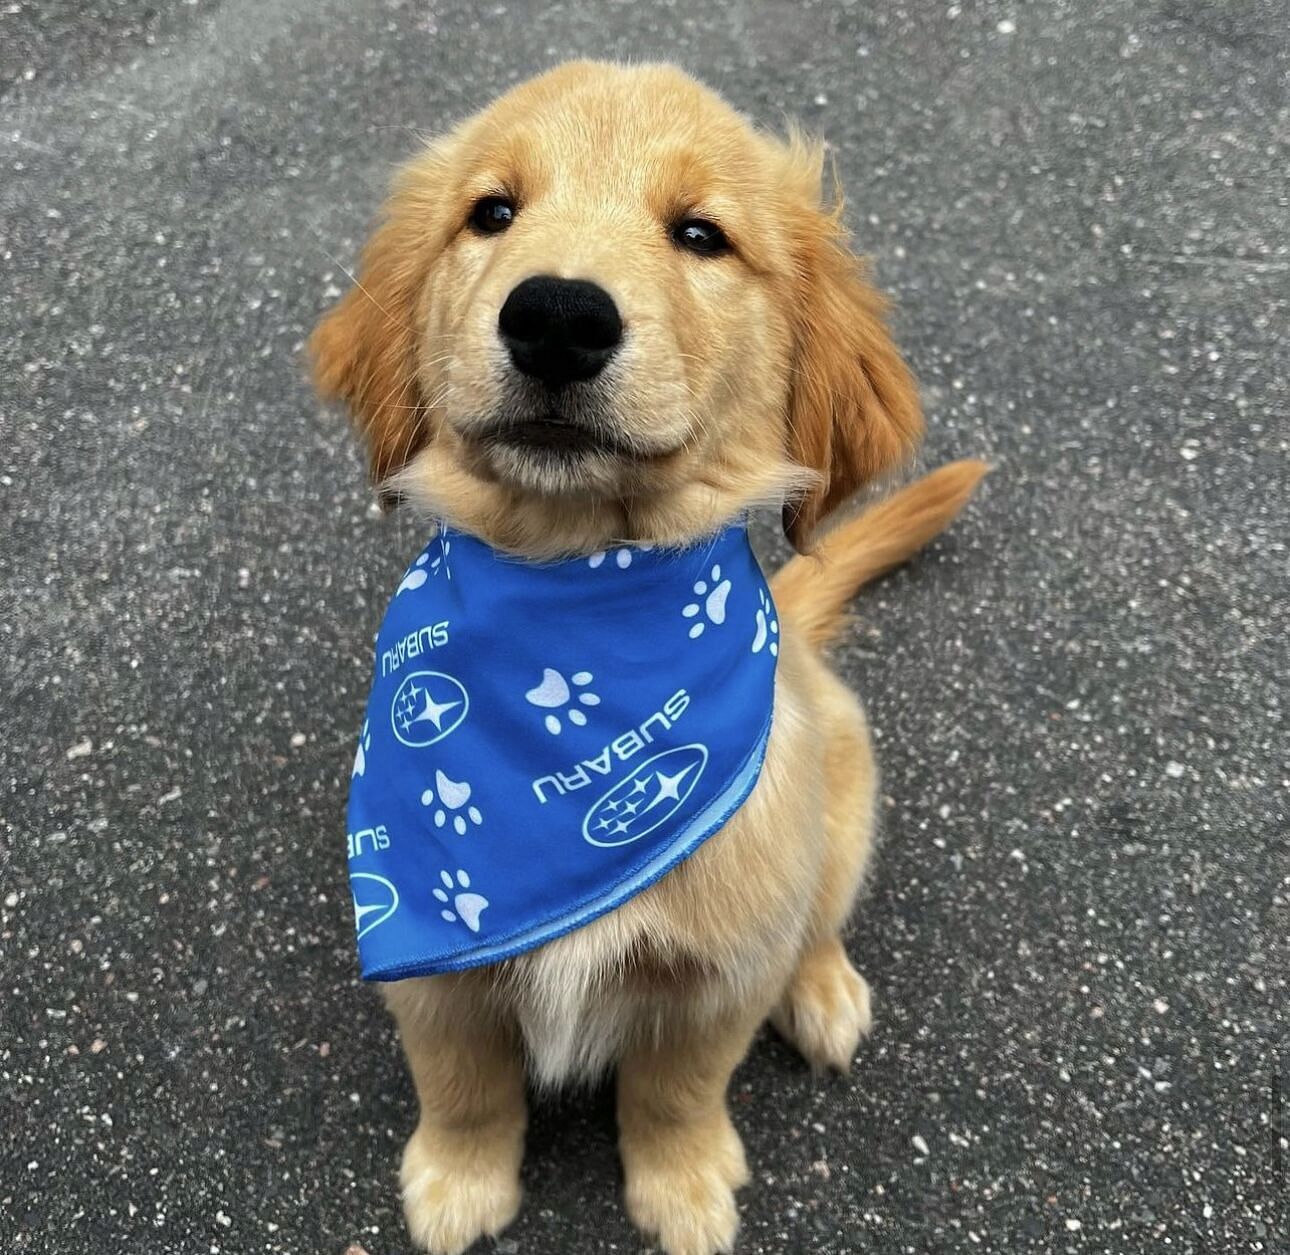 brown dog with a blue subaru bandana around its neck